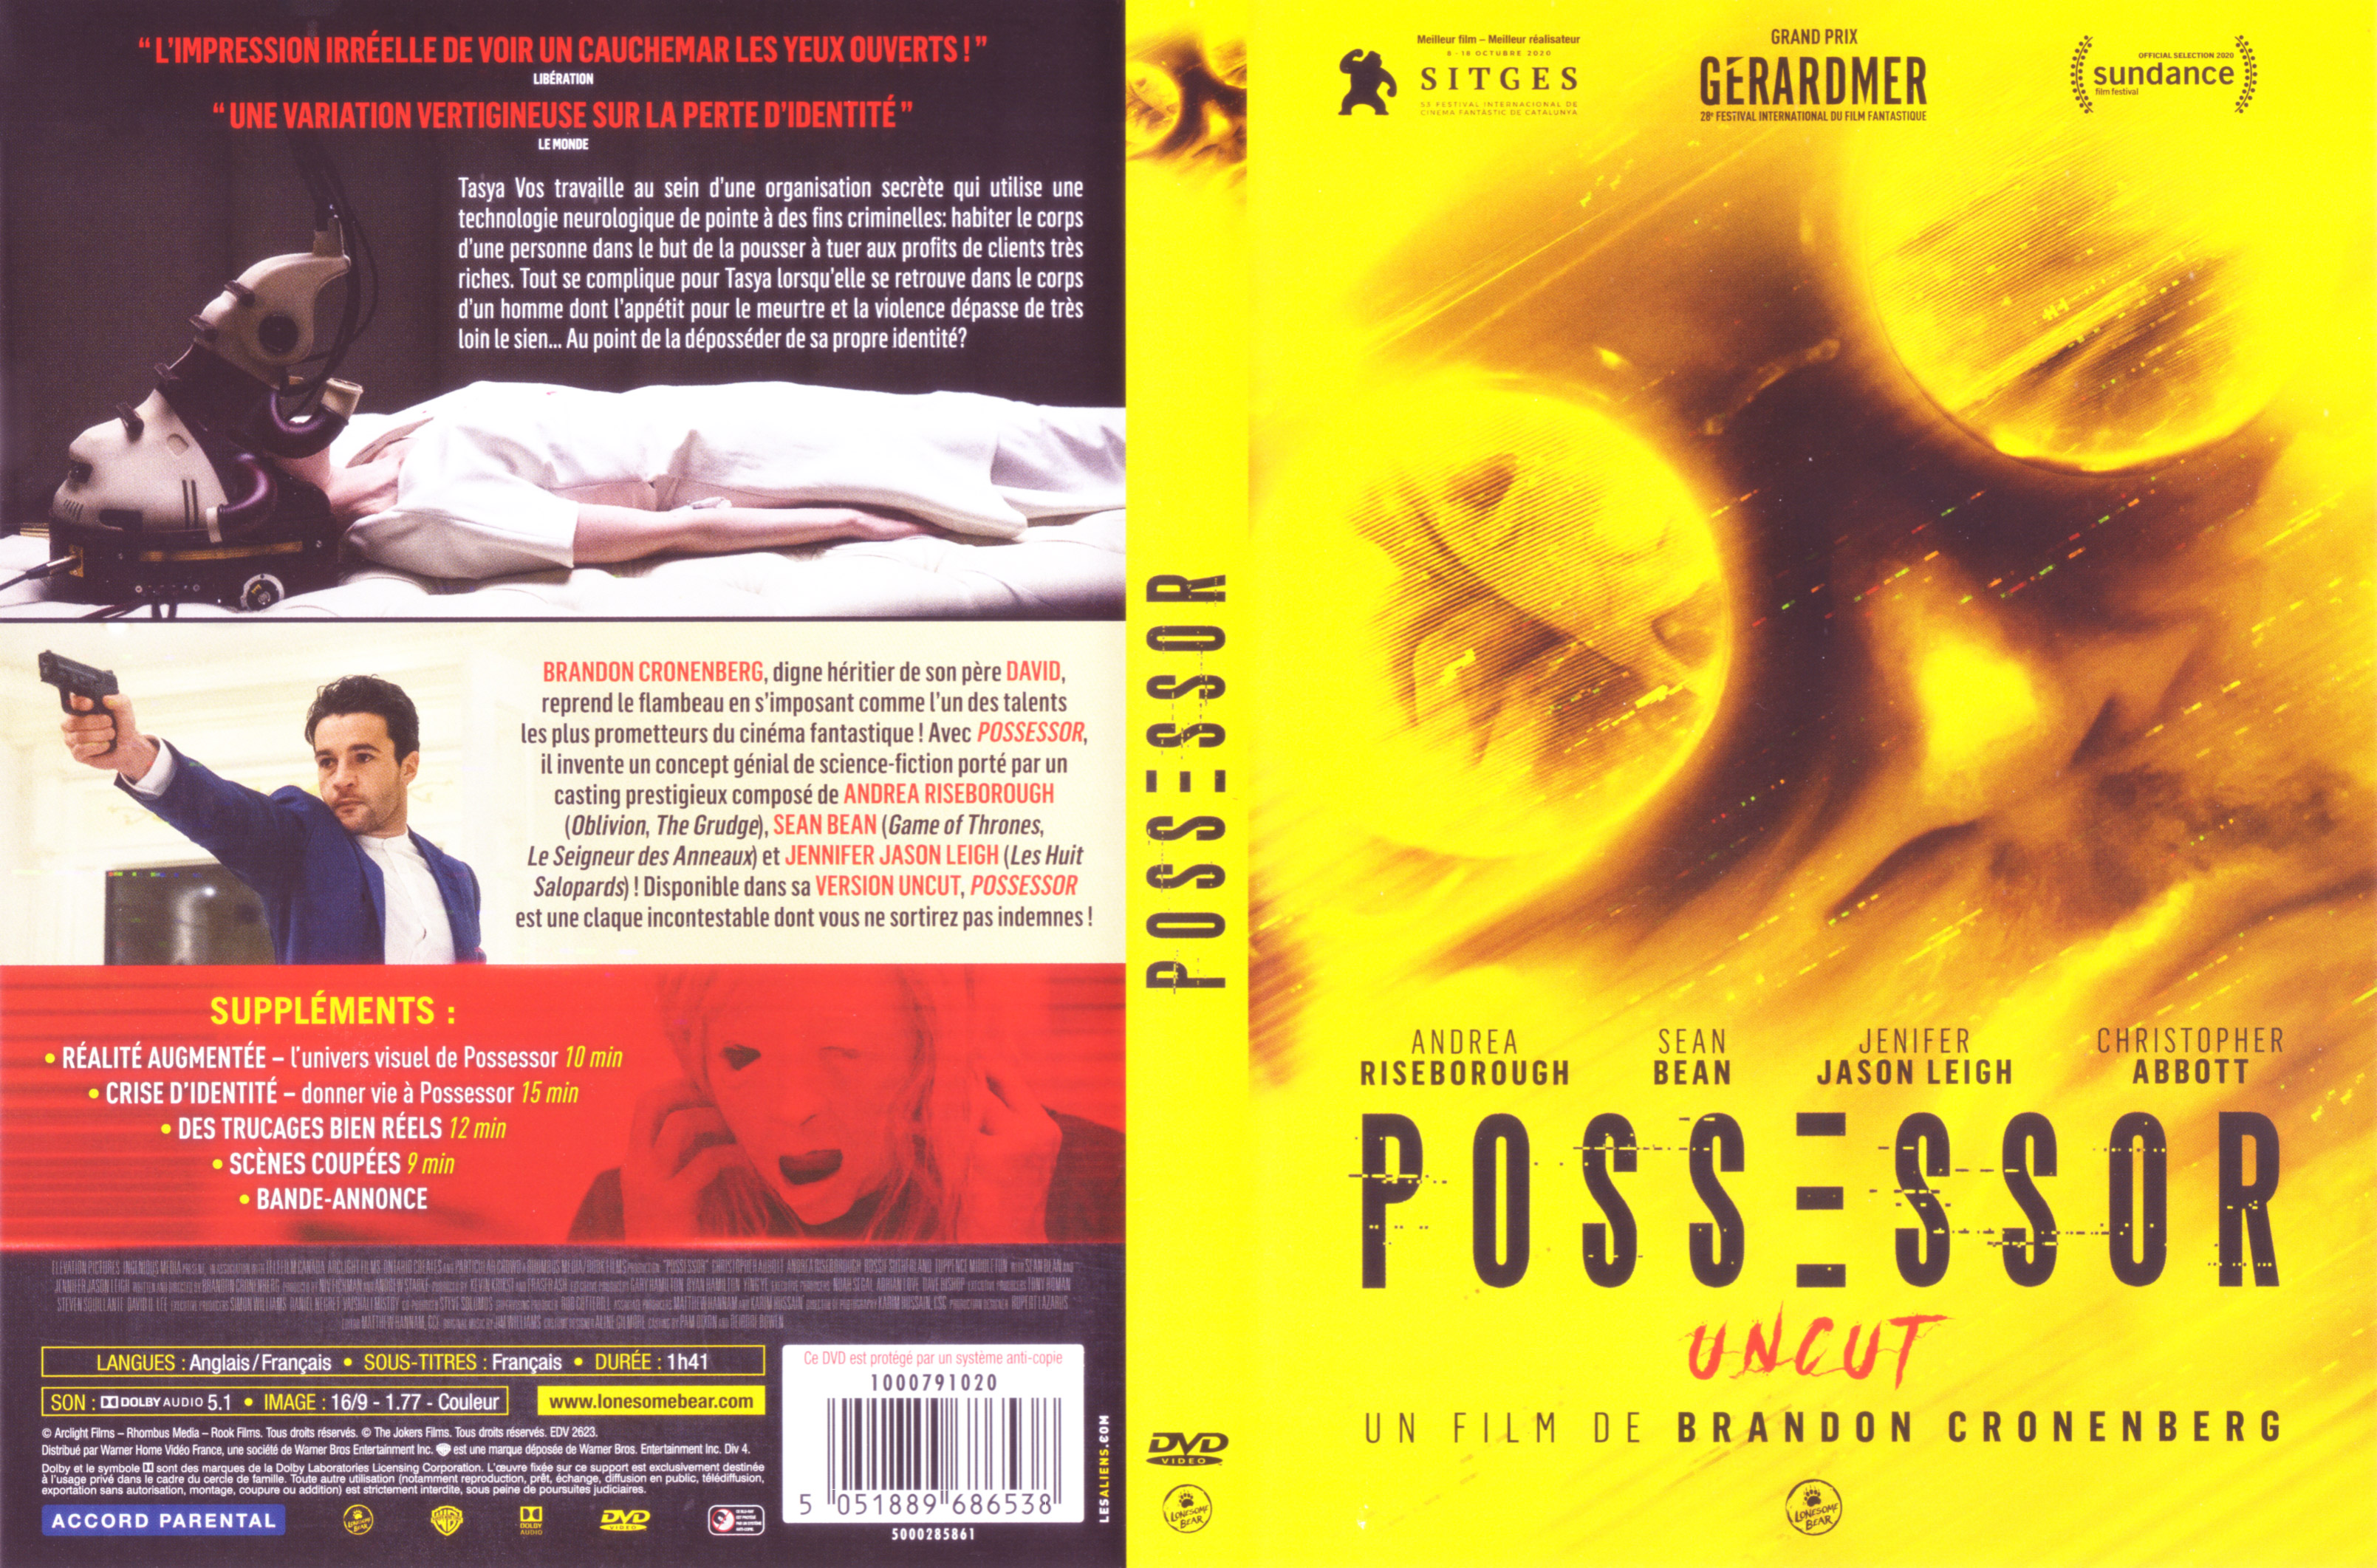 Jaquette DVD Possessor (Uncut)